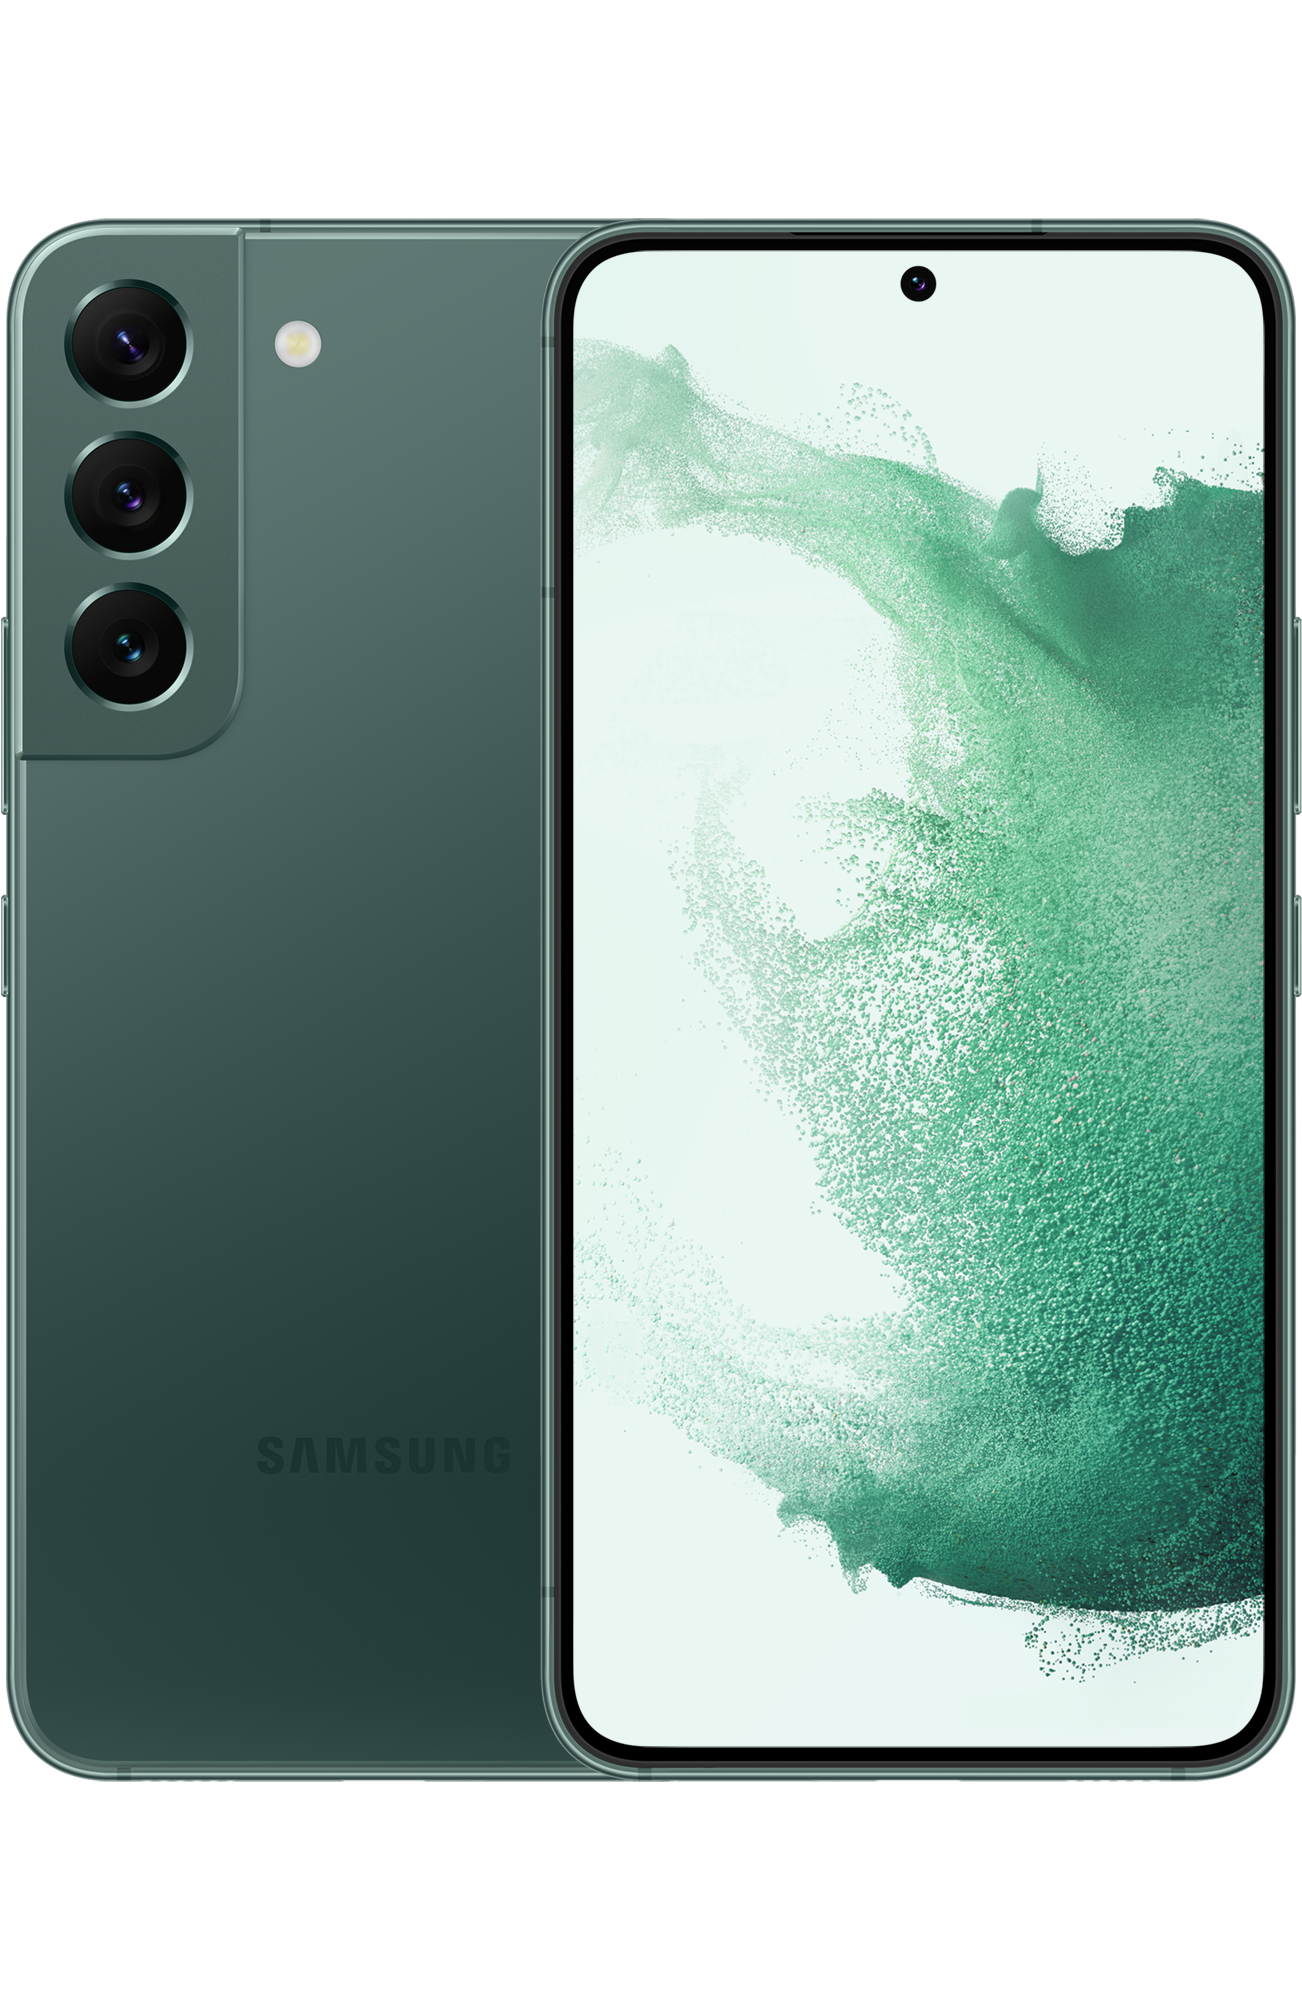 Samsung Galaxy S22 5G 128 GB Green